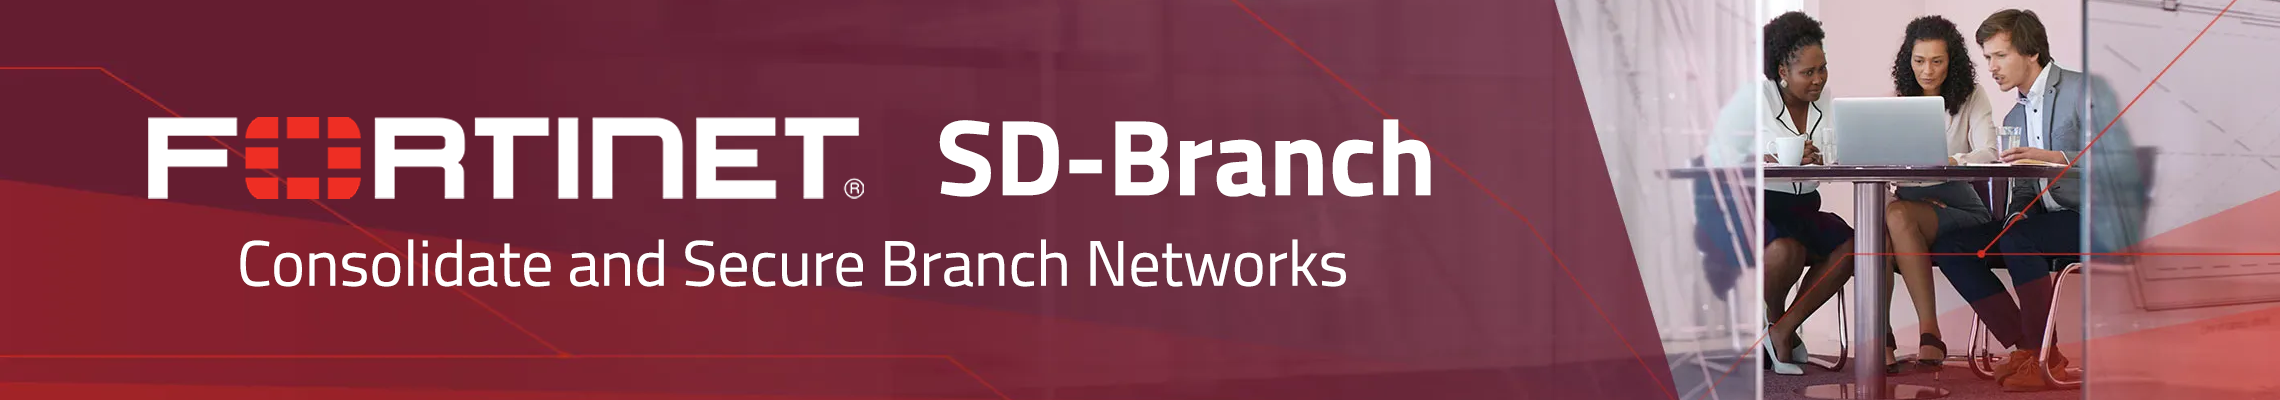 SD-Branch Banner